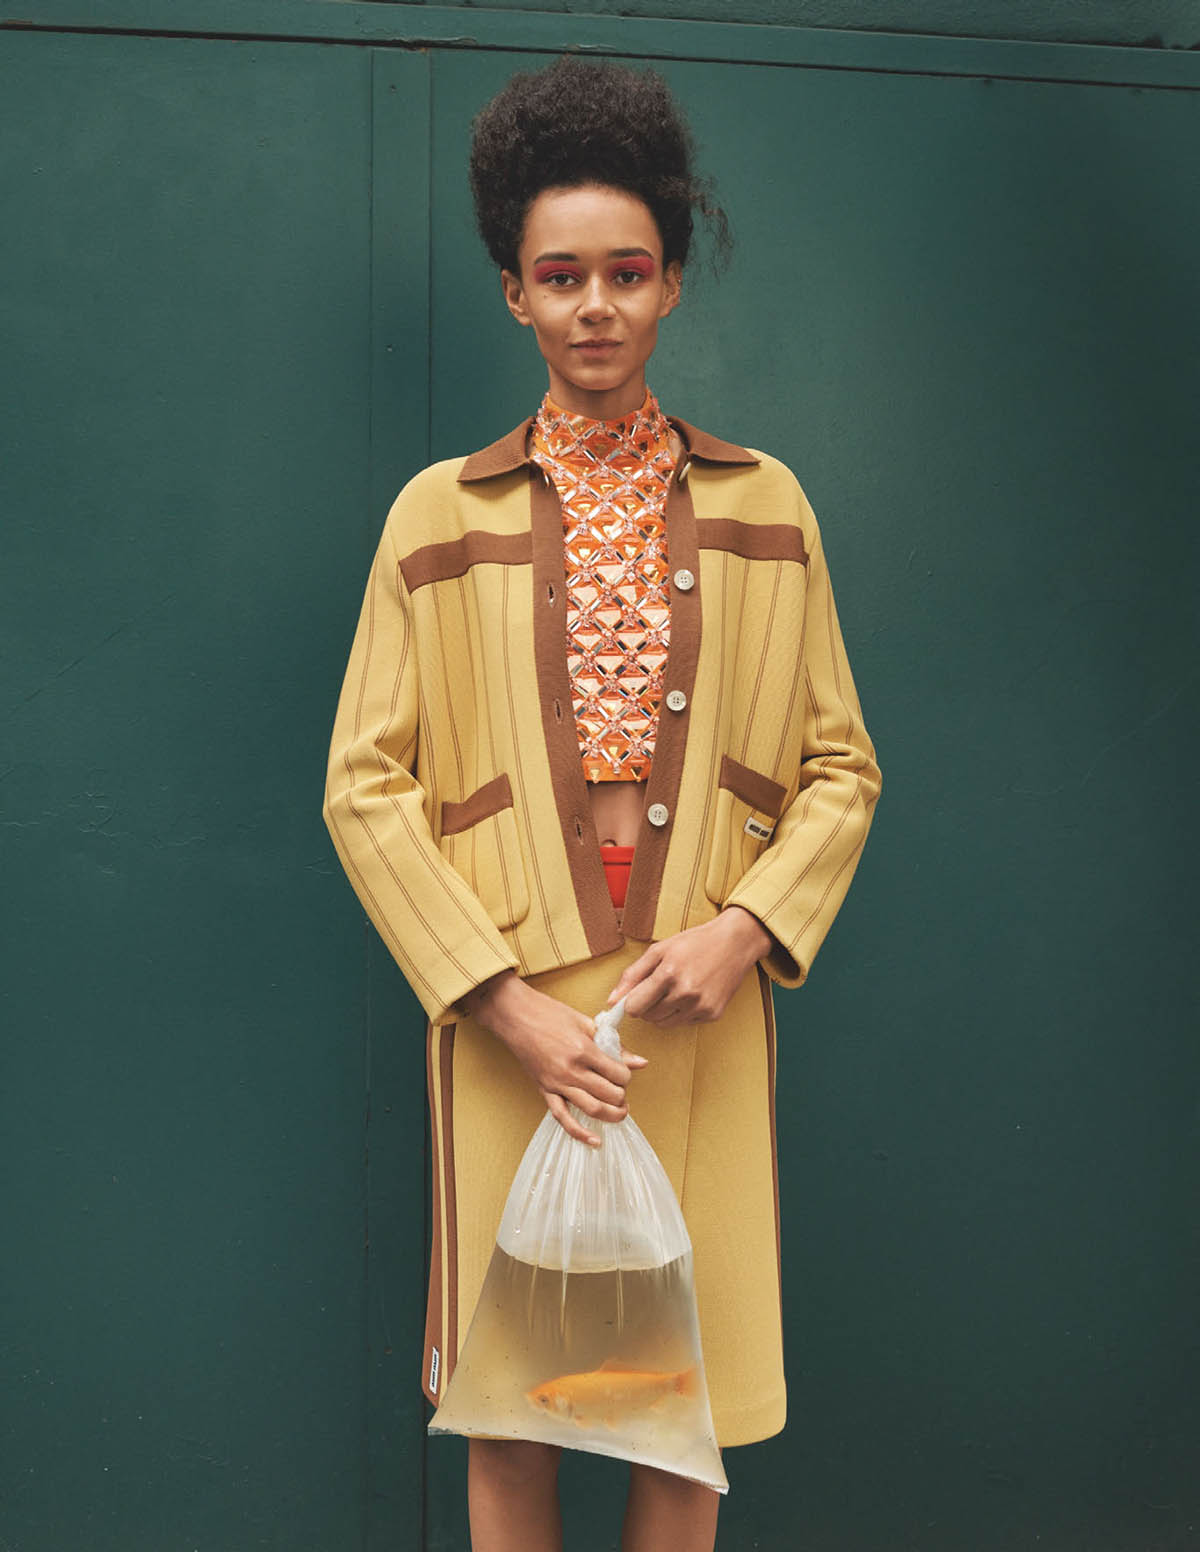 Binx Walton by Craig McDean for British Vogue April 2021